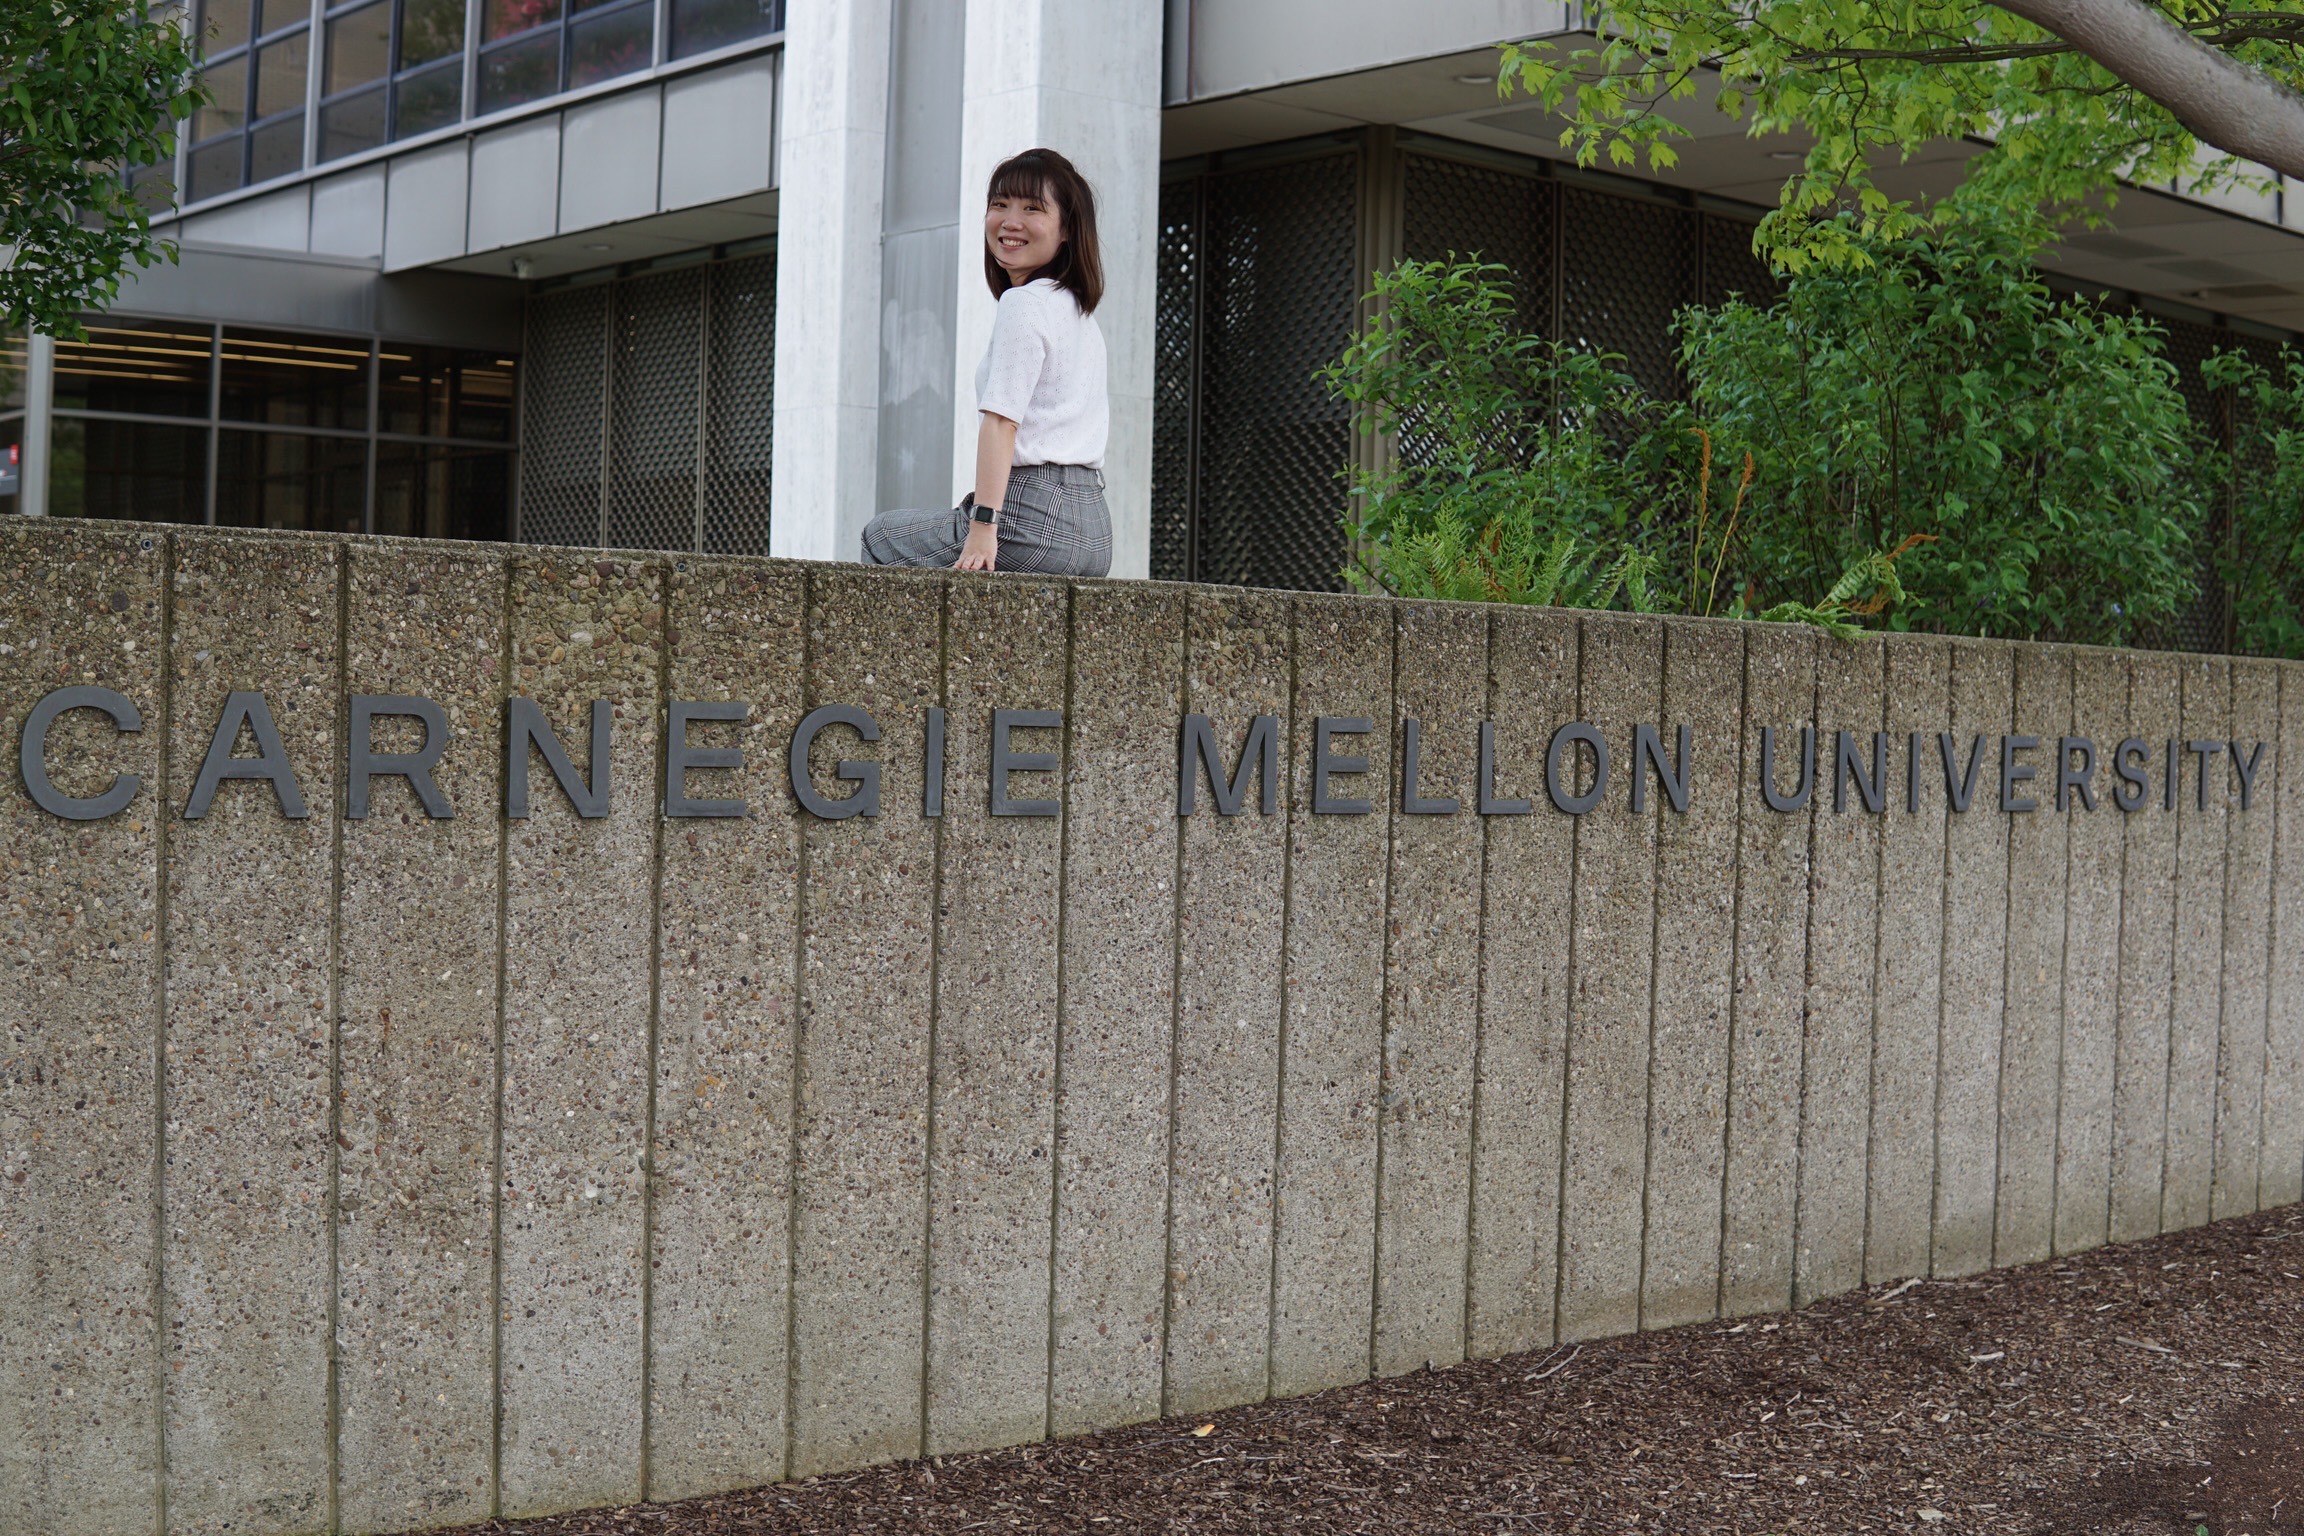 Linglong Chen at Carnegie Mellon University's campus